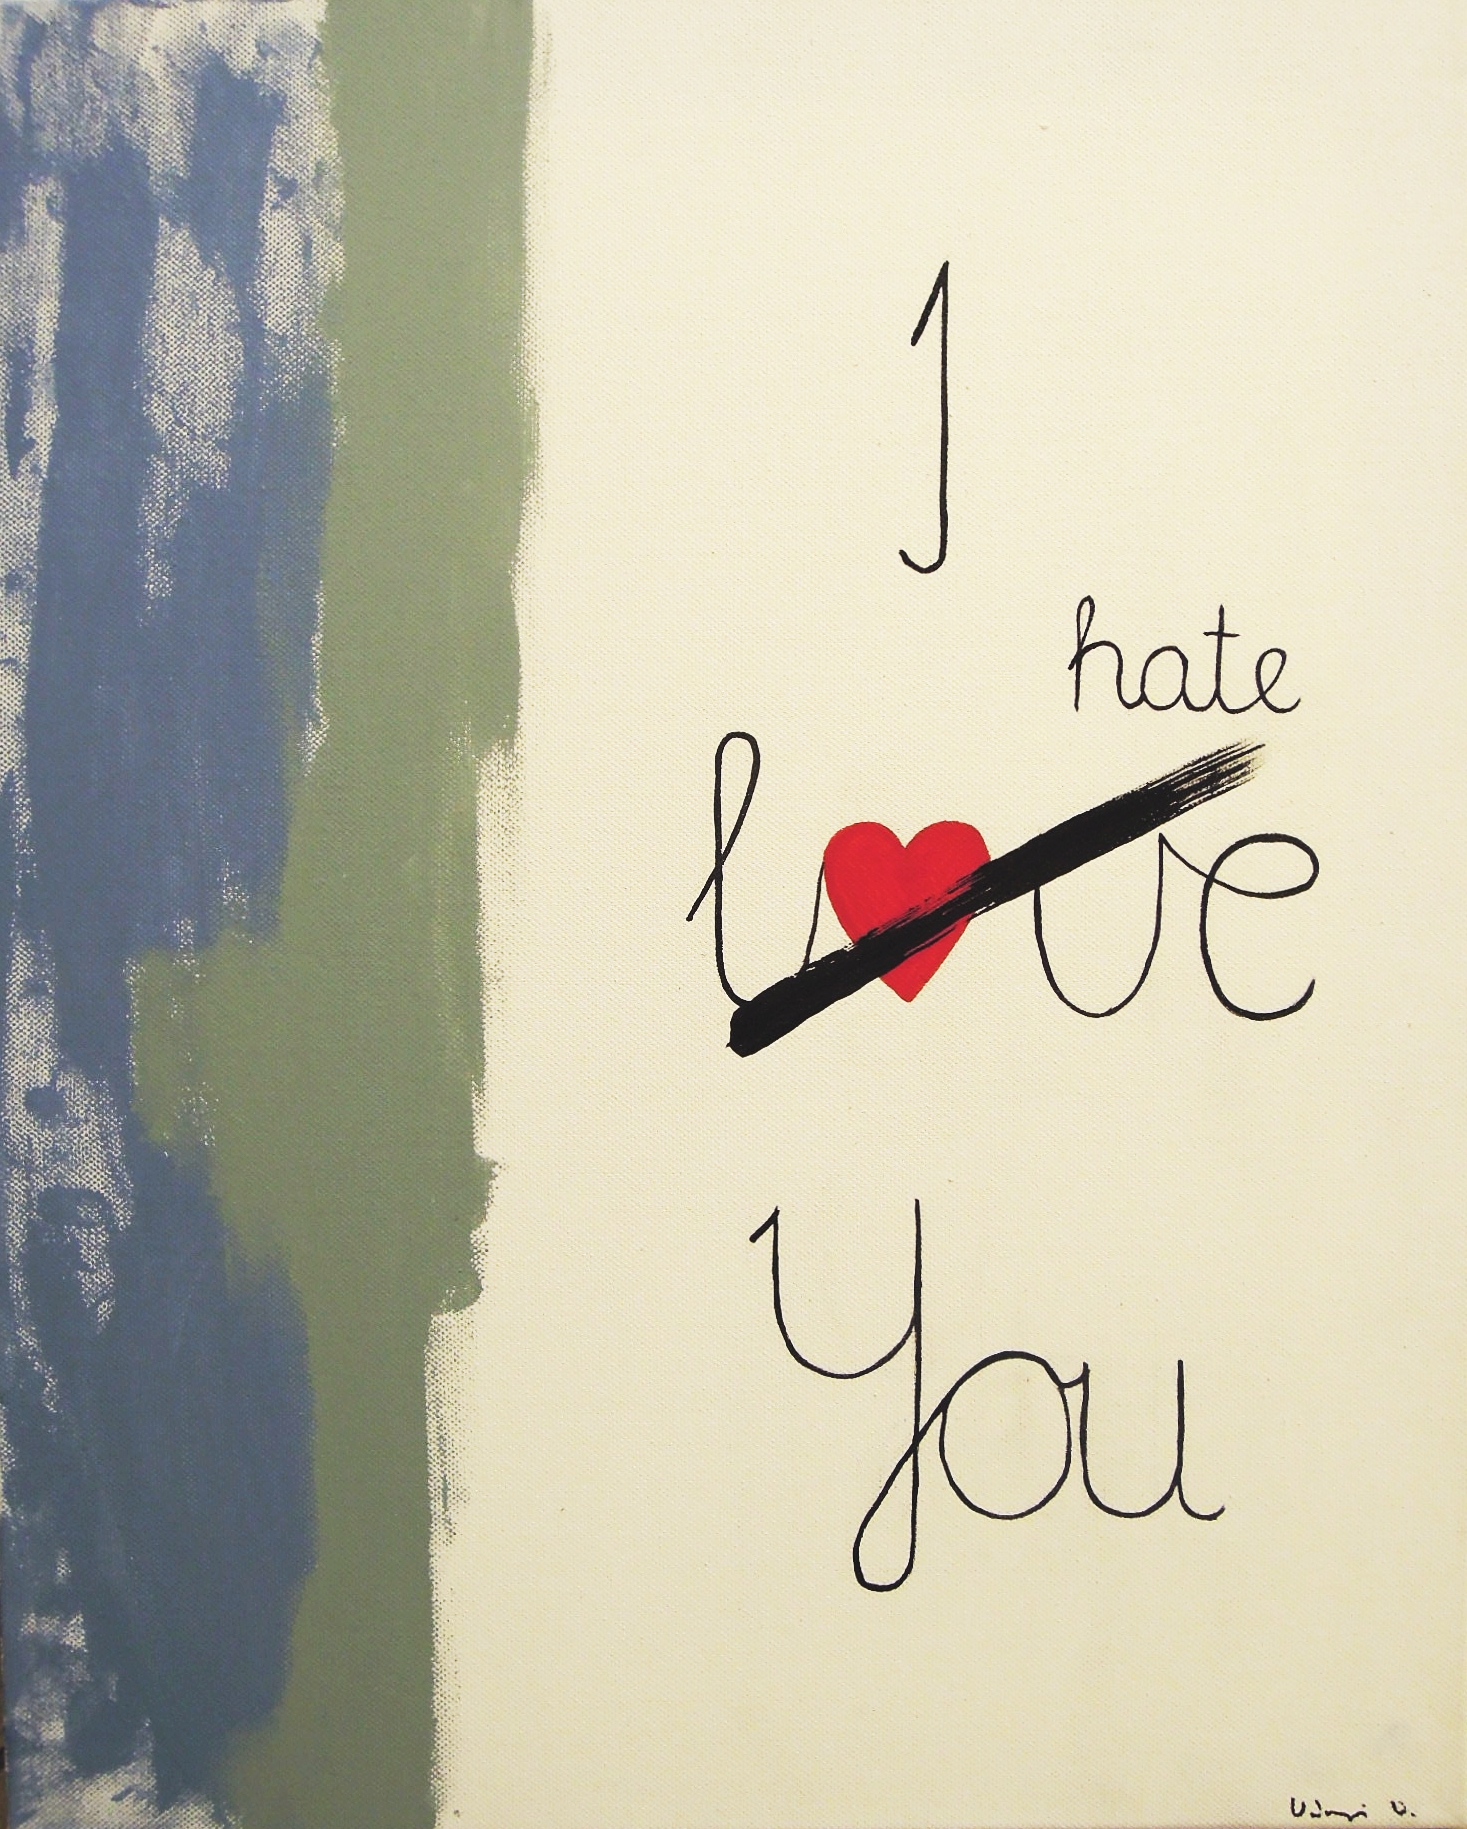 I love You - I hate You